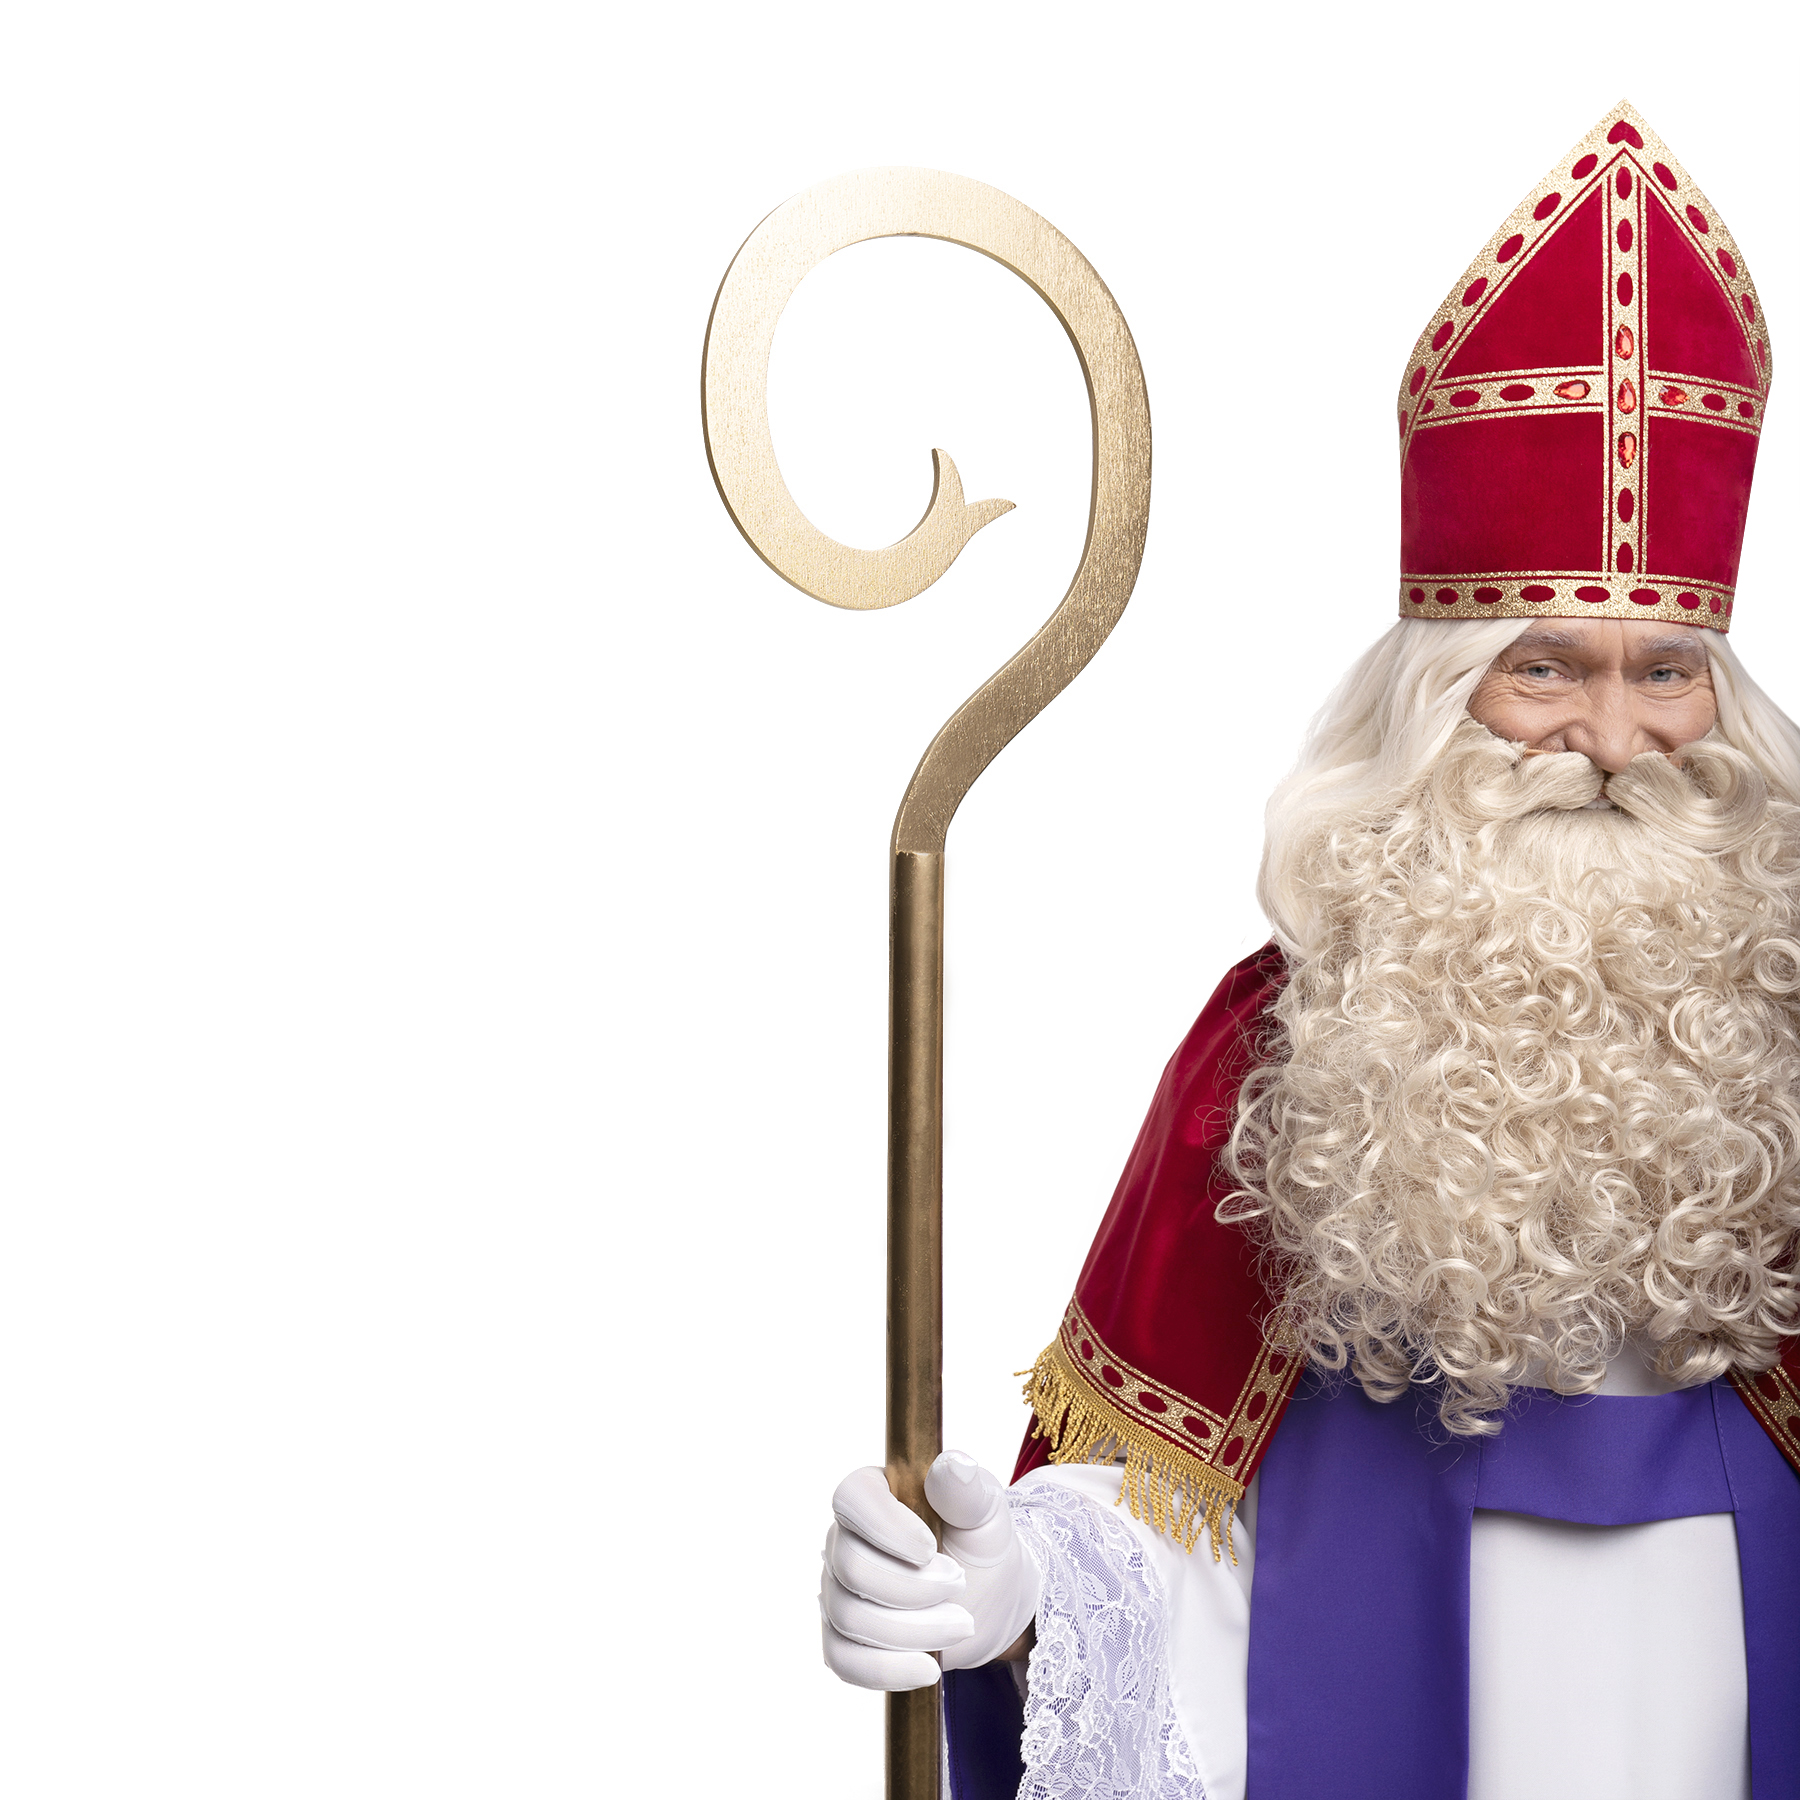 Saint Nicholas costume the Pleasant